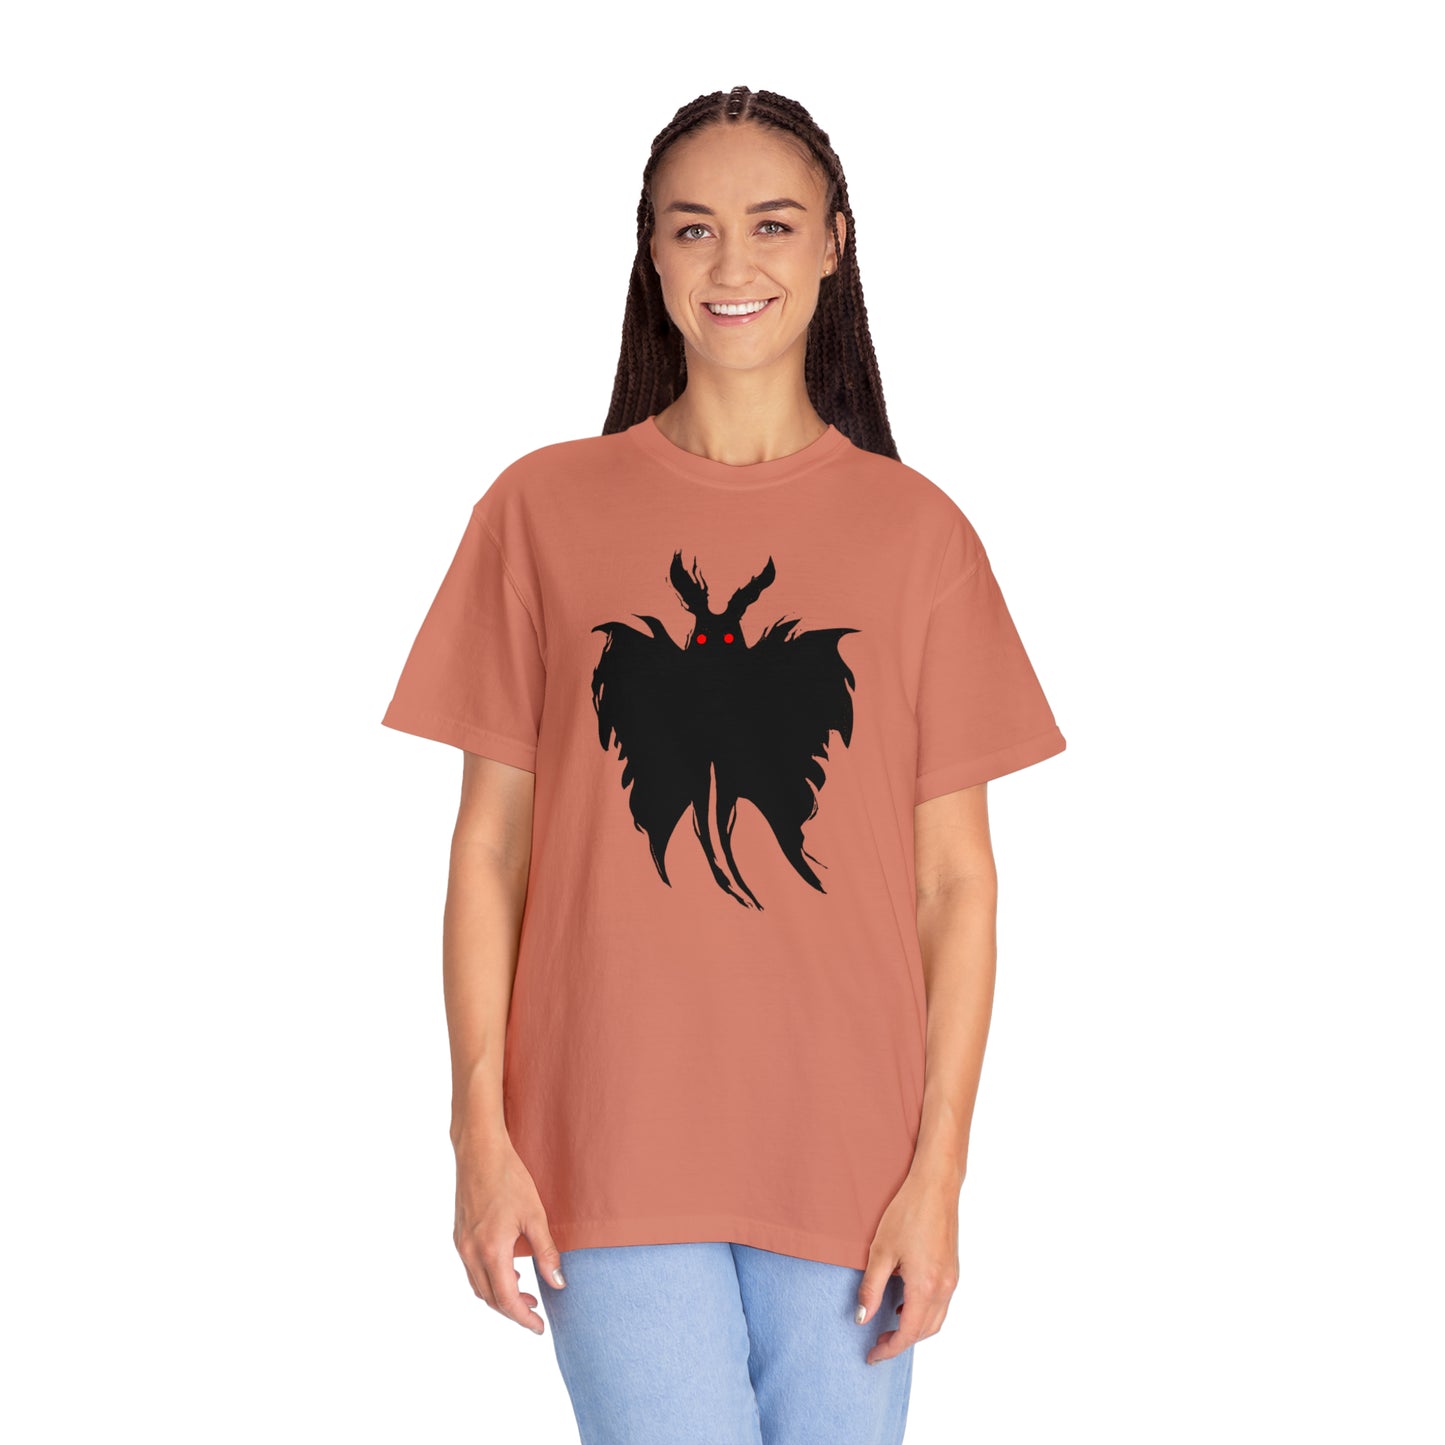 Creepy Unisex Mothman Silhouette Halloween T-Shirt - Comfort Colors Spooky Season Cryptid T-shirt